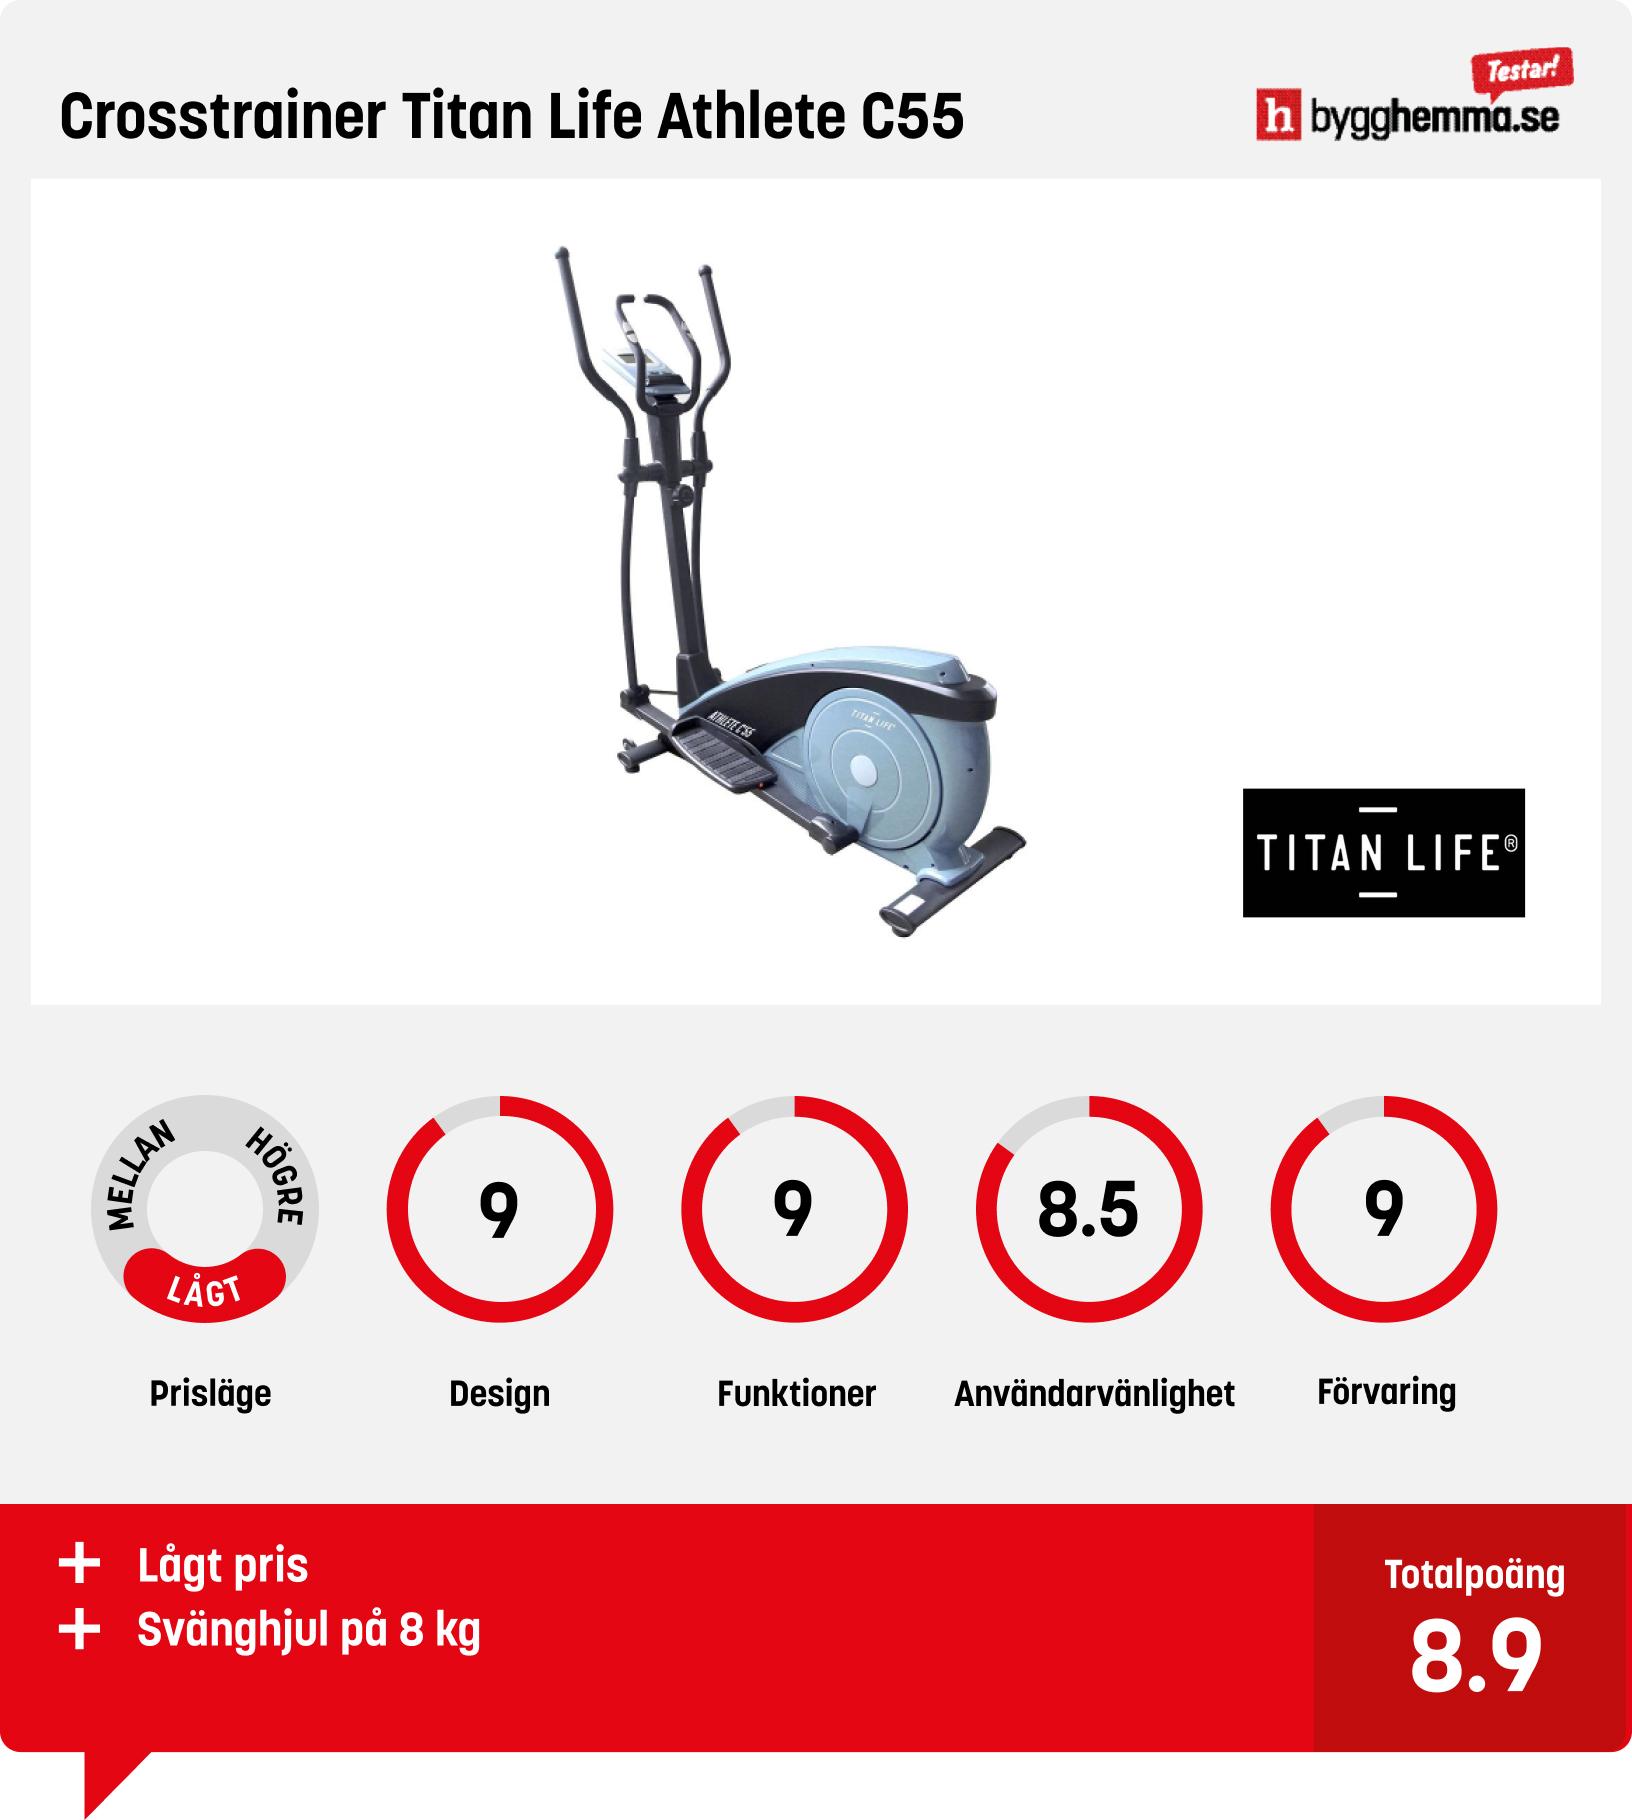 Crosstrainer bäst i test - Crosstrainer Titan Life Athlete C55